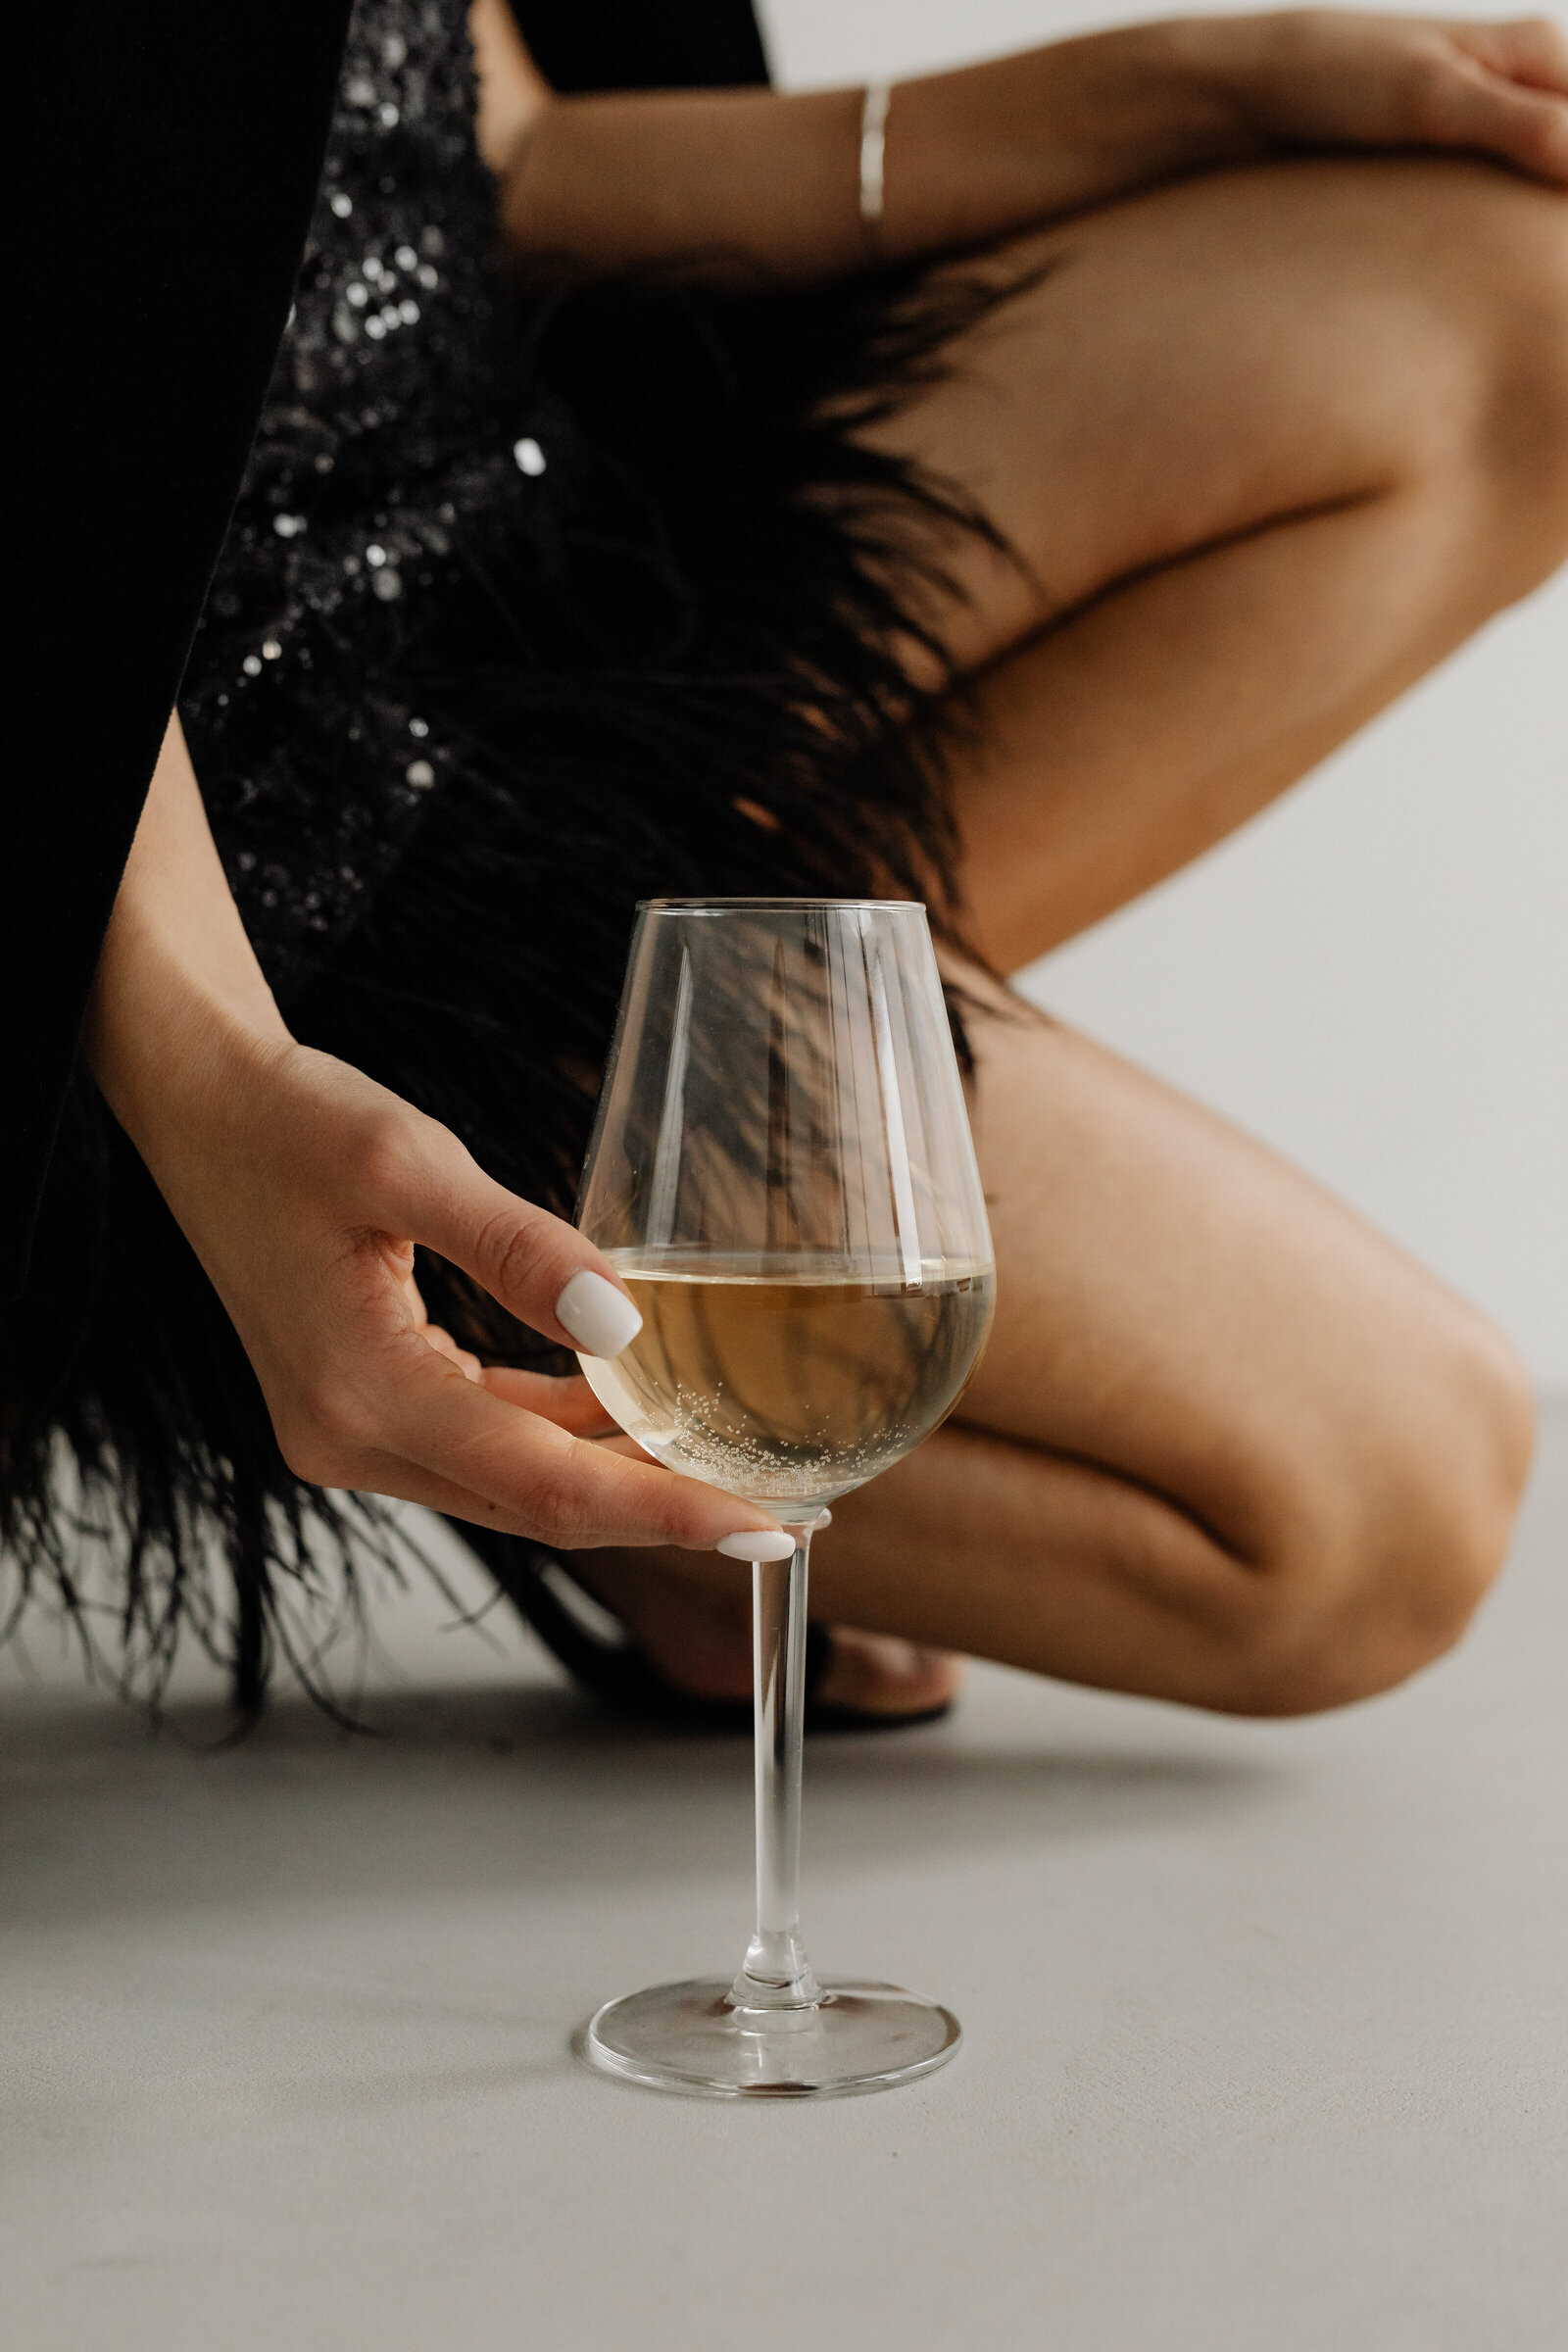 kaboompics_classy-aesthetics-beautiful-asian-woman-in-black-evening-dress-white-wine-in-a-glass-29527